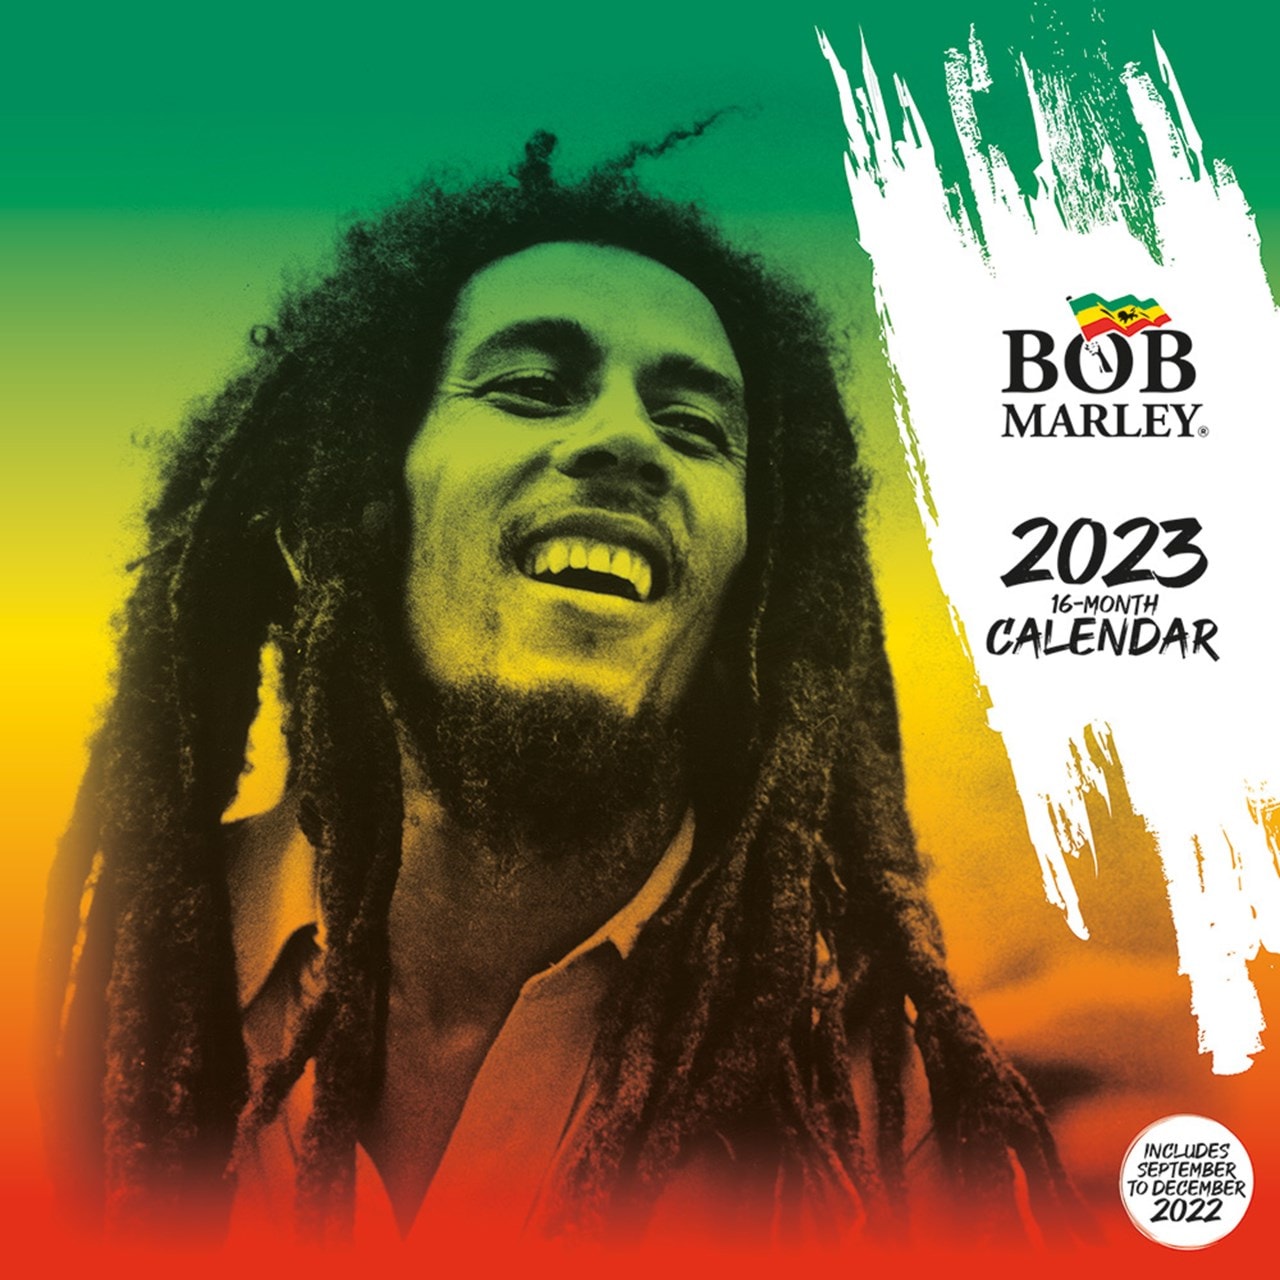 Bob Marley 2023 Square Calendar Calendar Free Shipping Over 20 